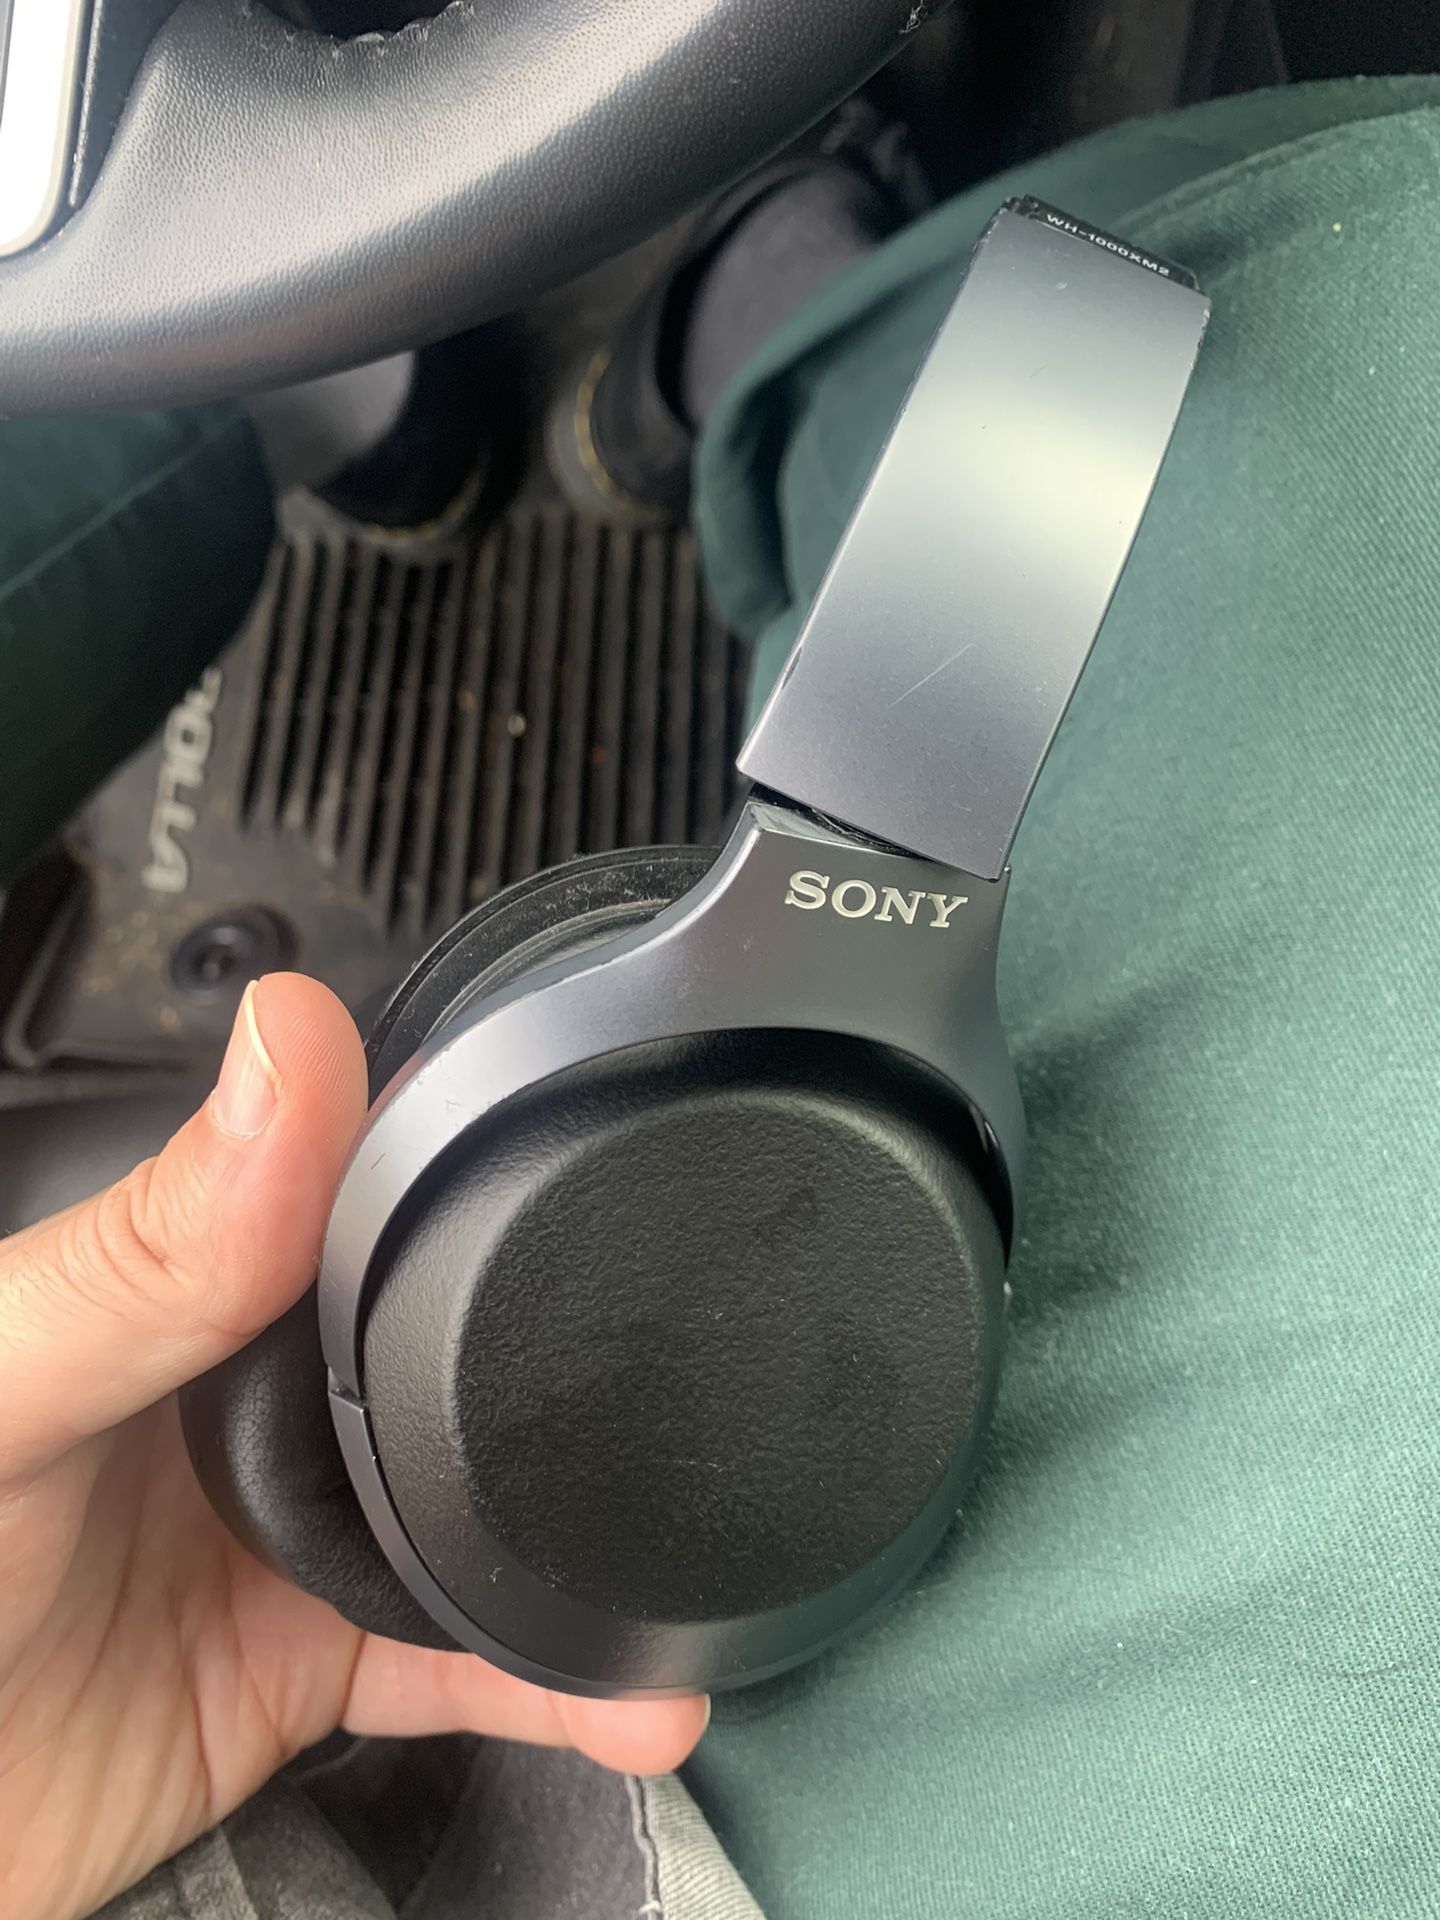 Sony WH1000XM2 Noise cancelling Headphones